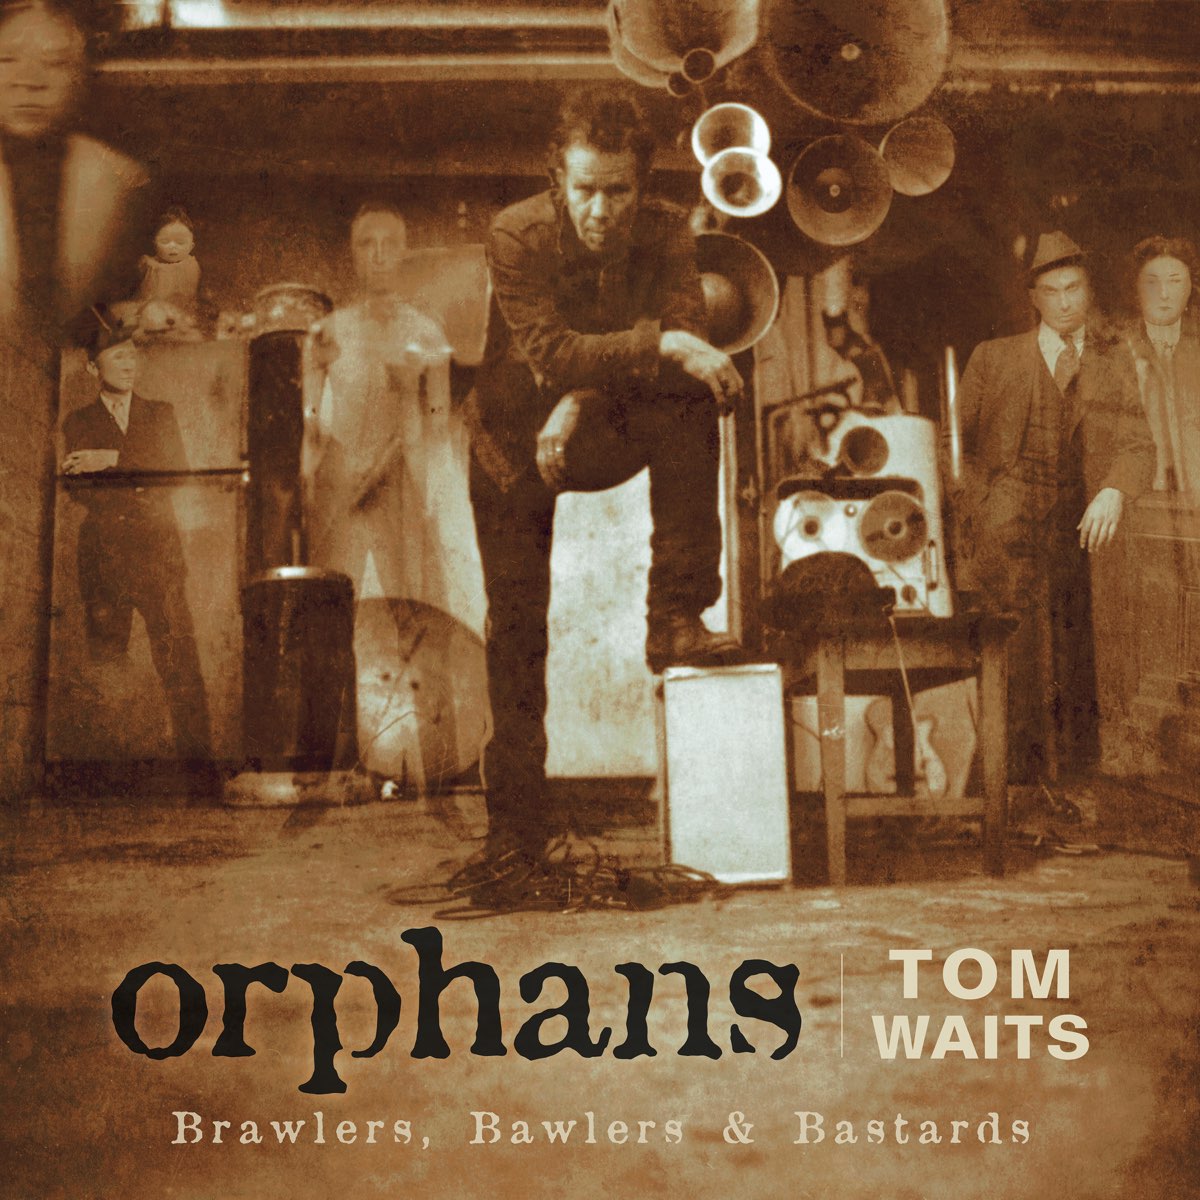 tom waits orphans torrent